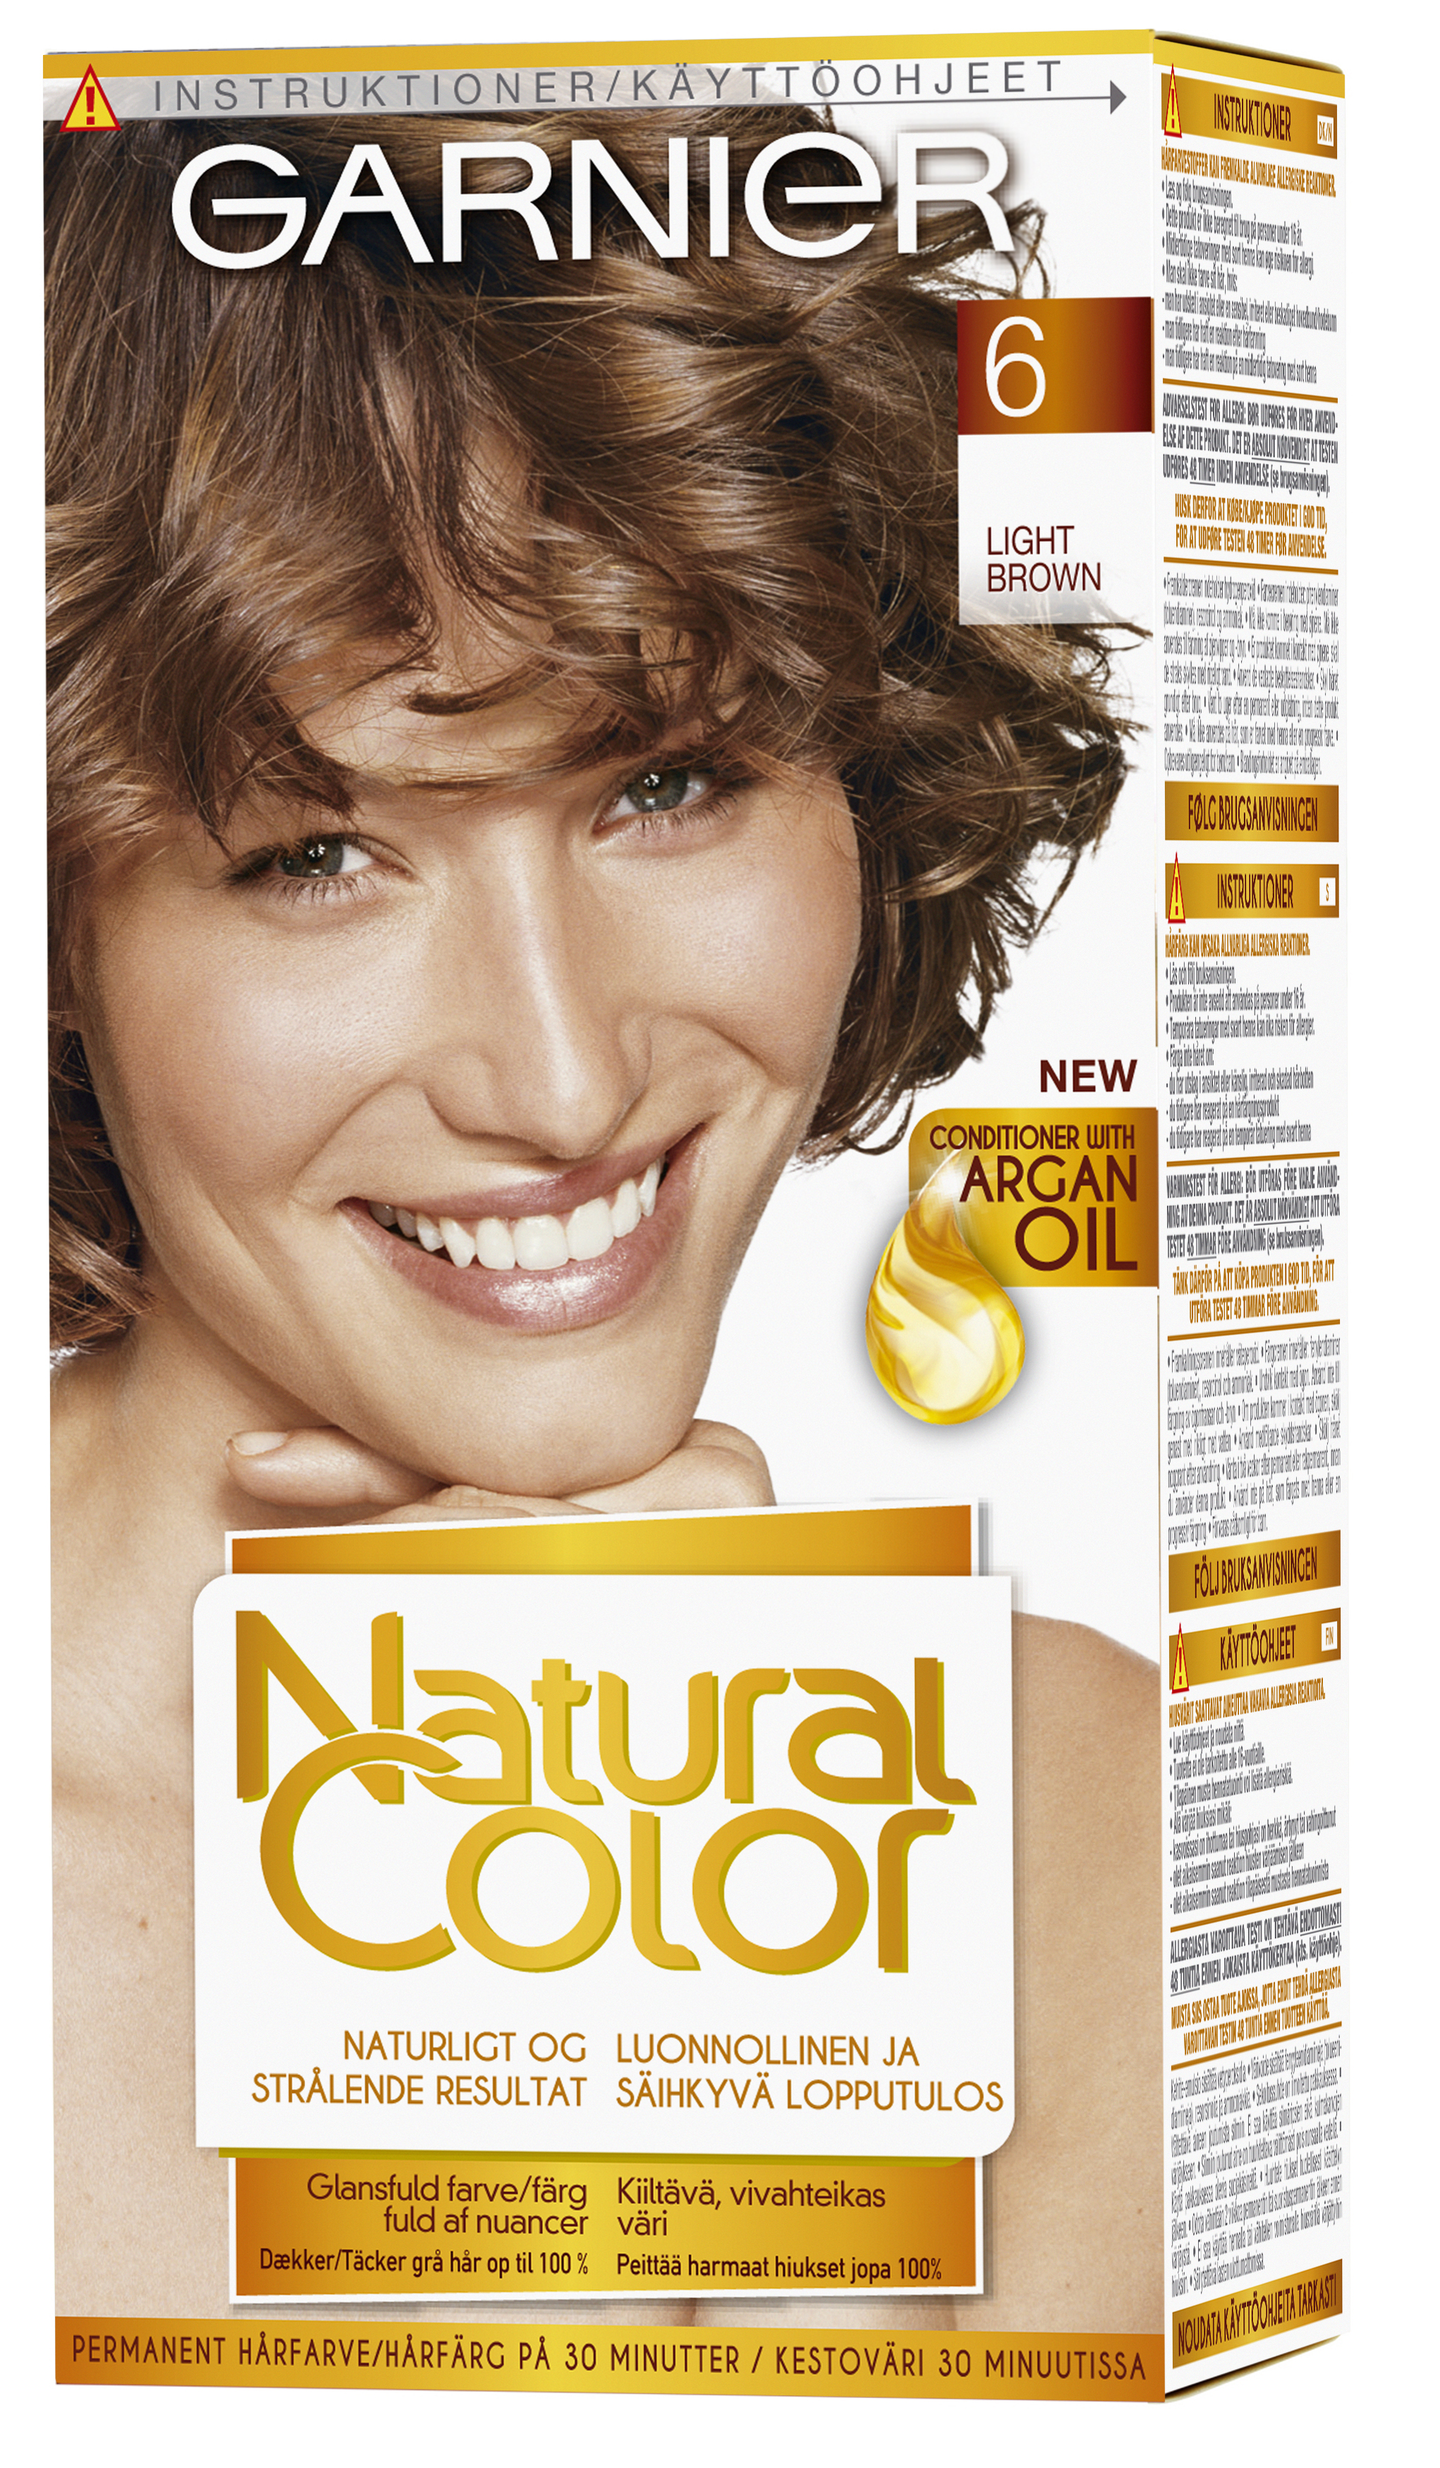 Garnier Natural Color kestoväri 6.0 Light Brown vaaleanruskea